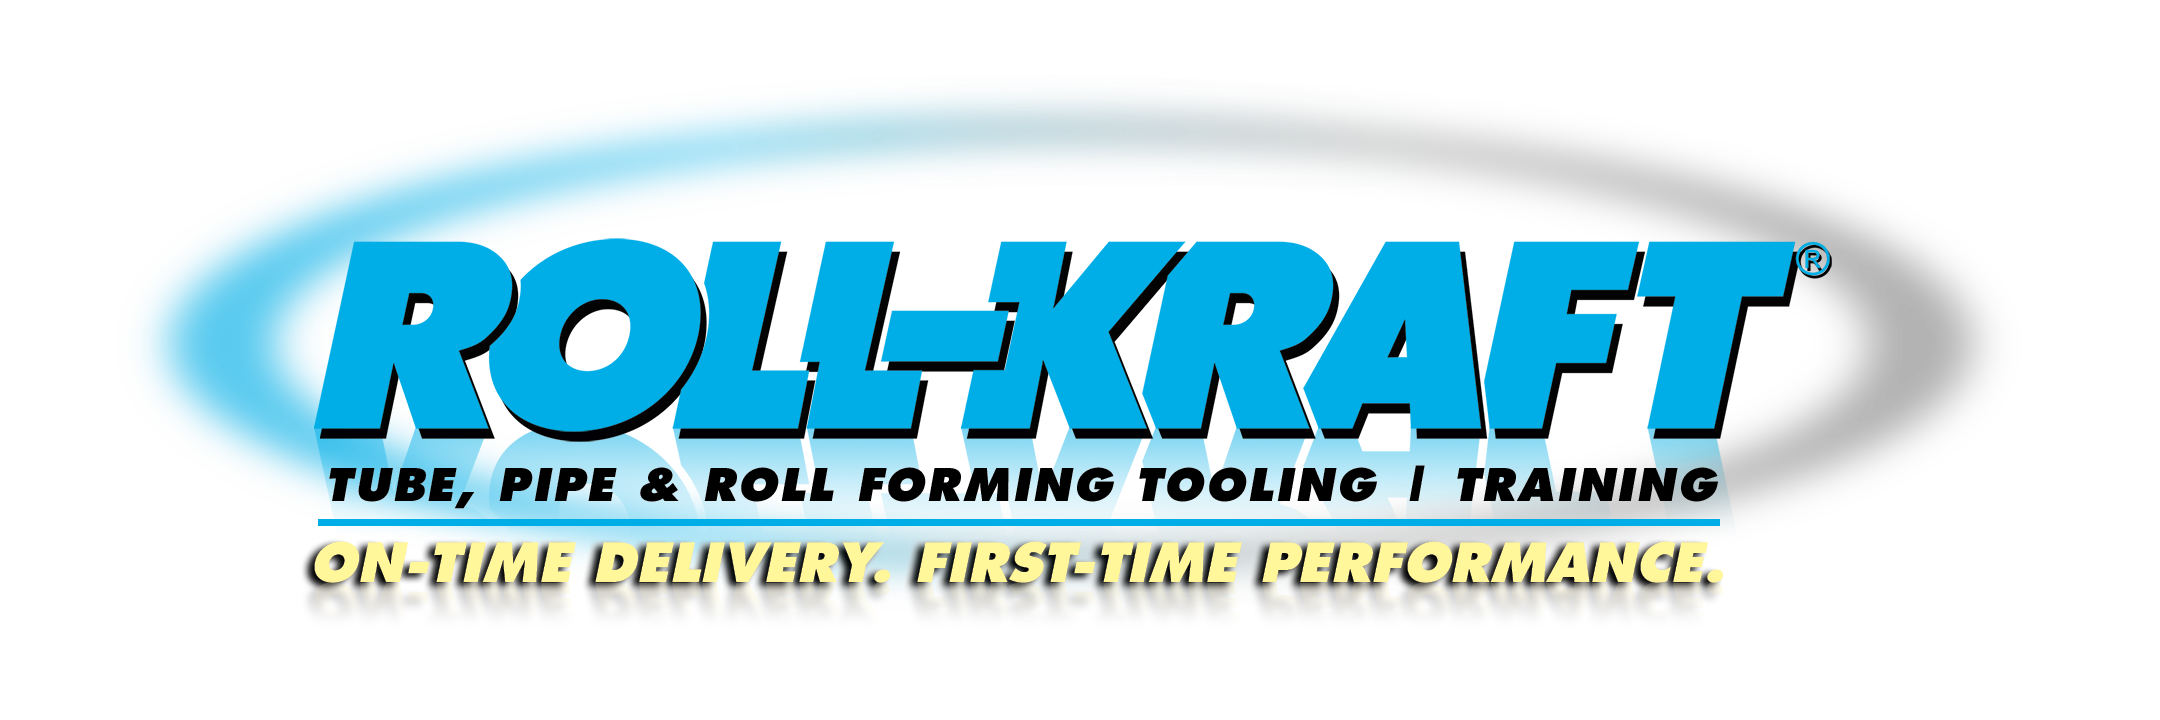 RK-logo-FINAL (ID 28223)